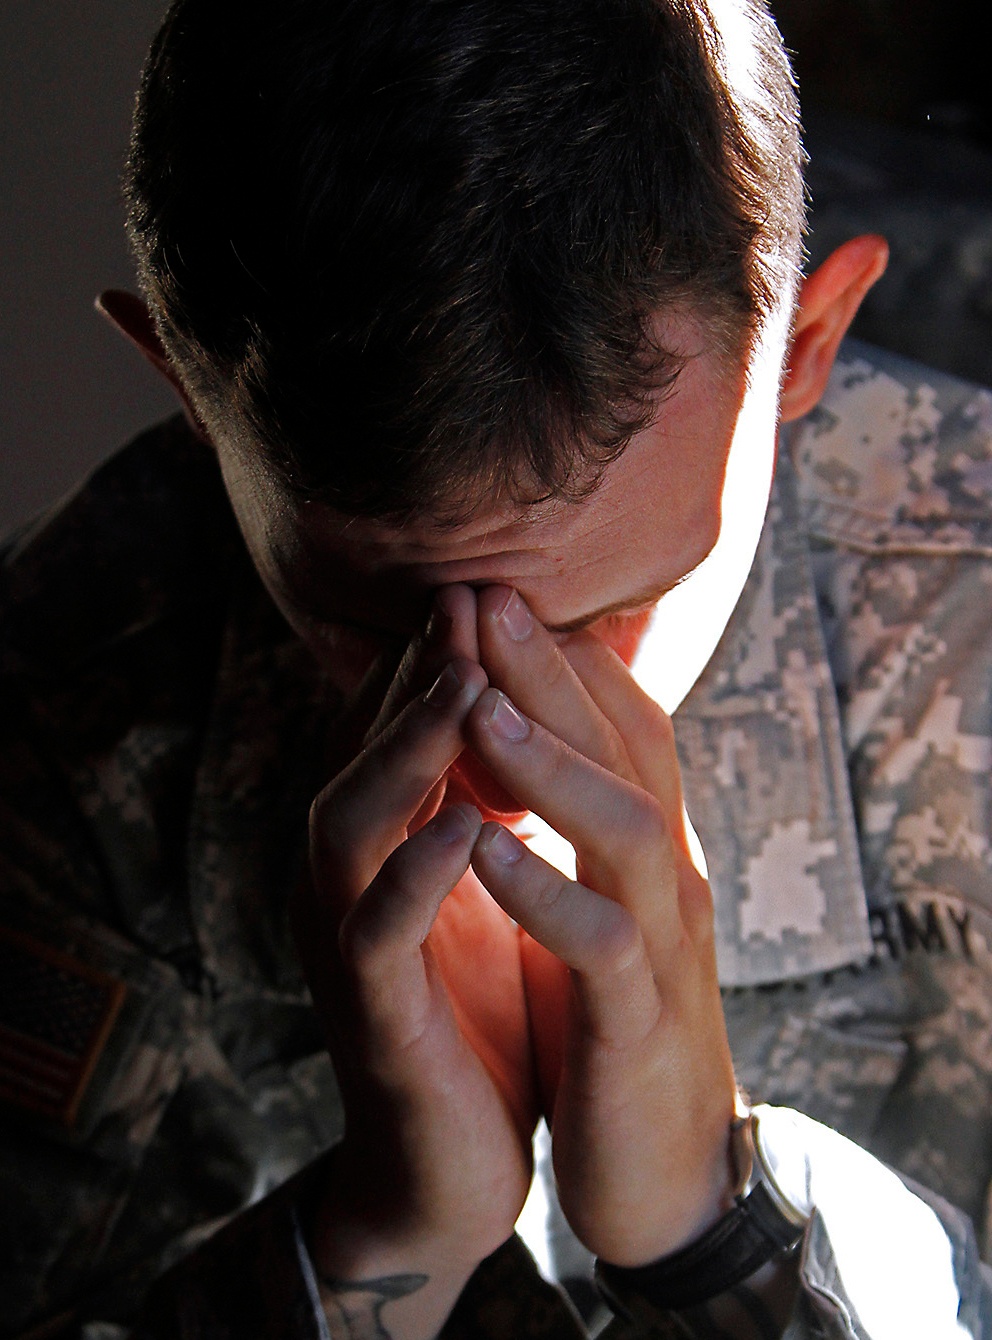 Army helps soldiers have courage to seek help